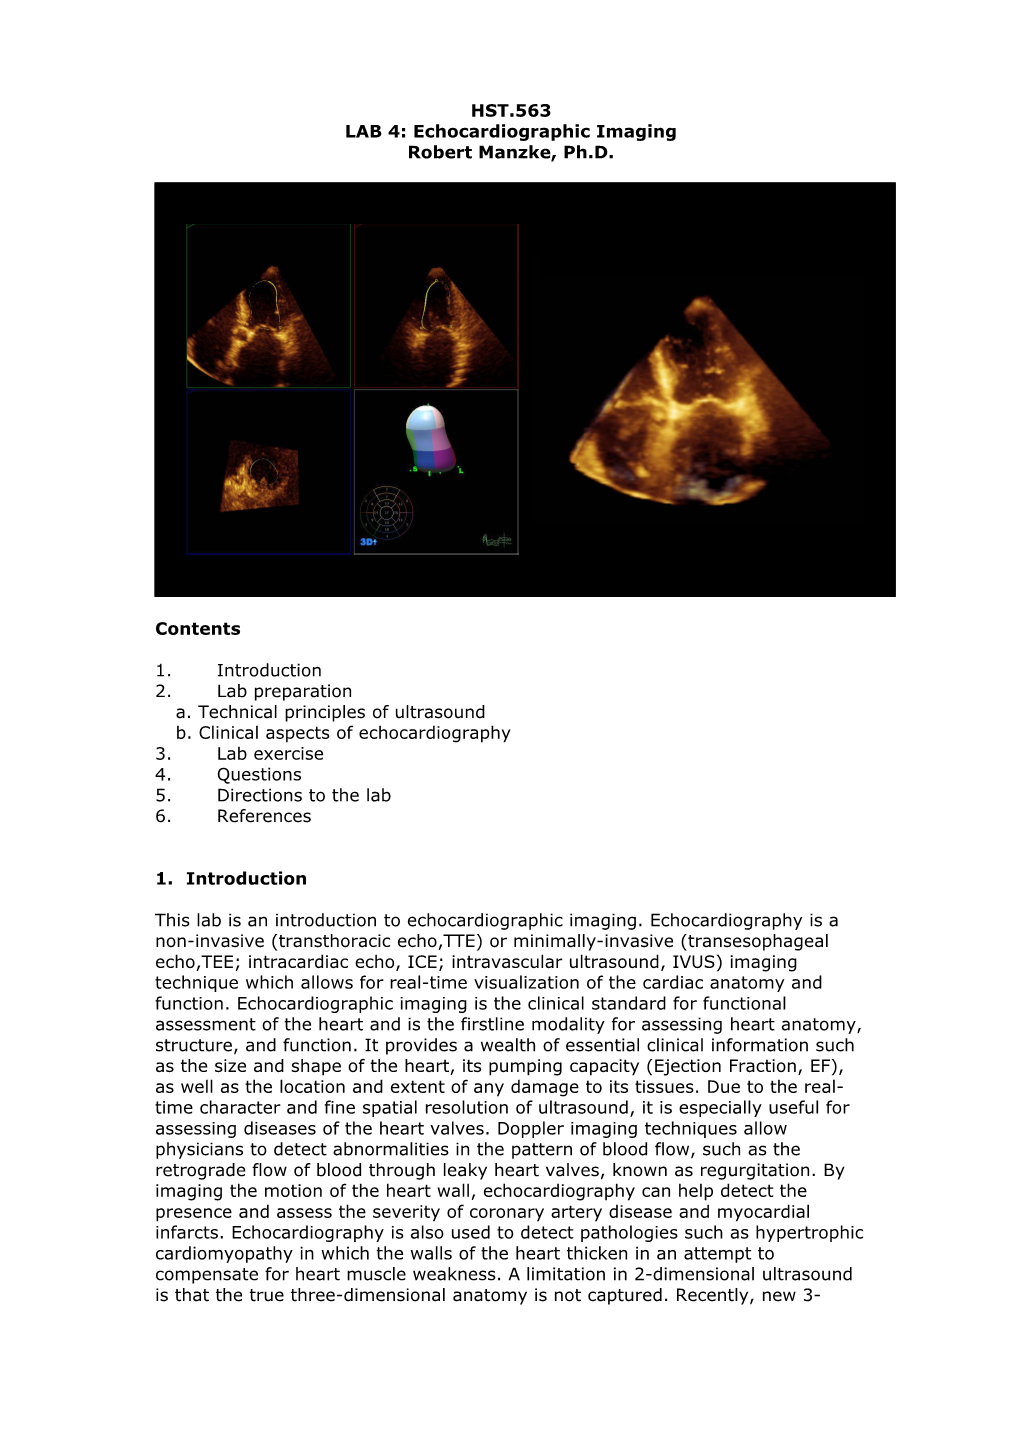 LAB 4: Echocardiographic Imaging